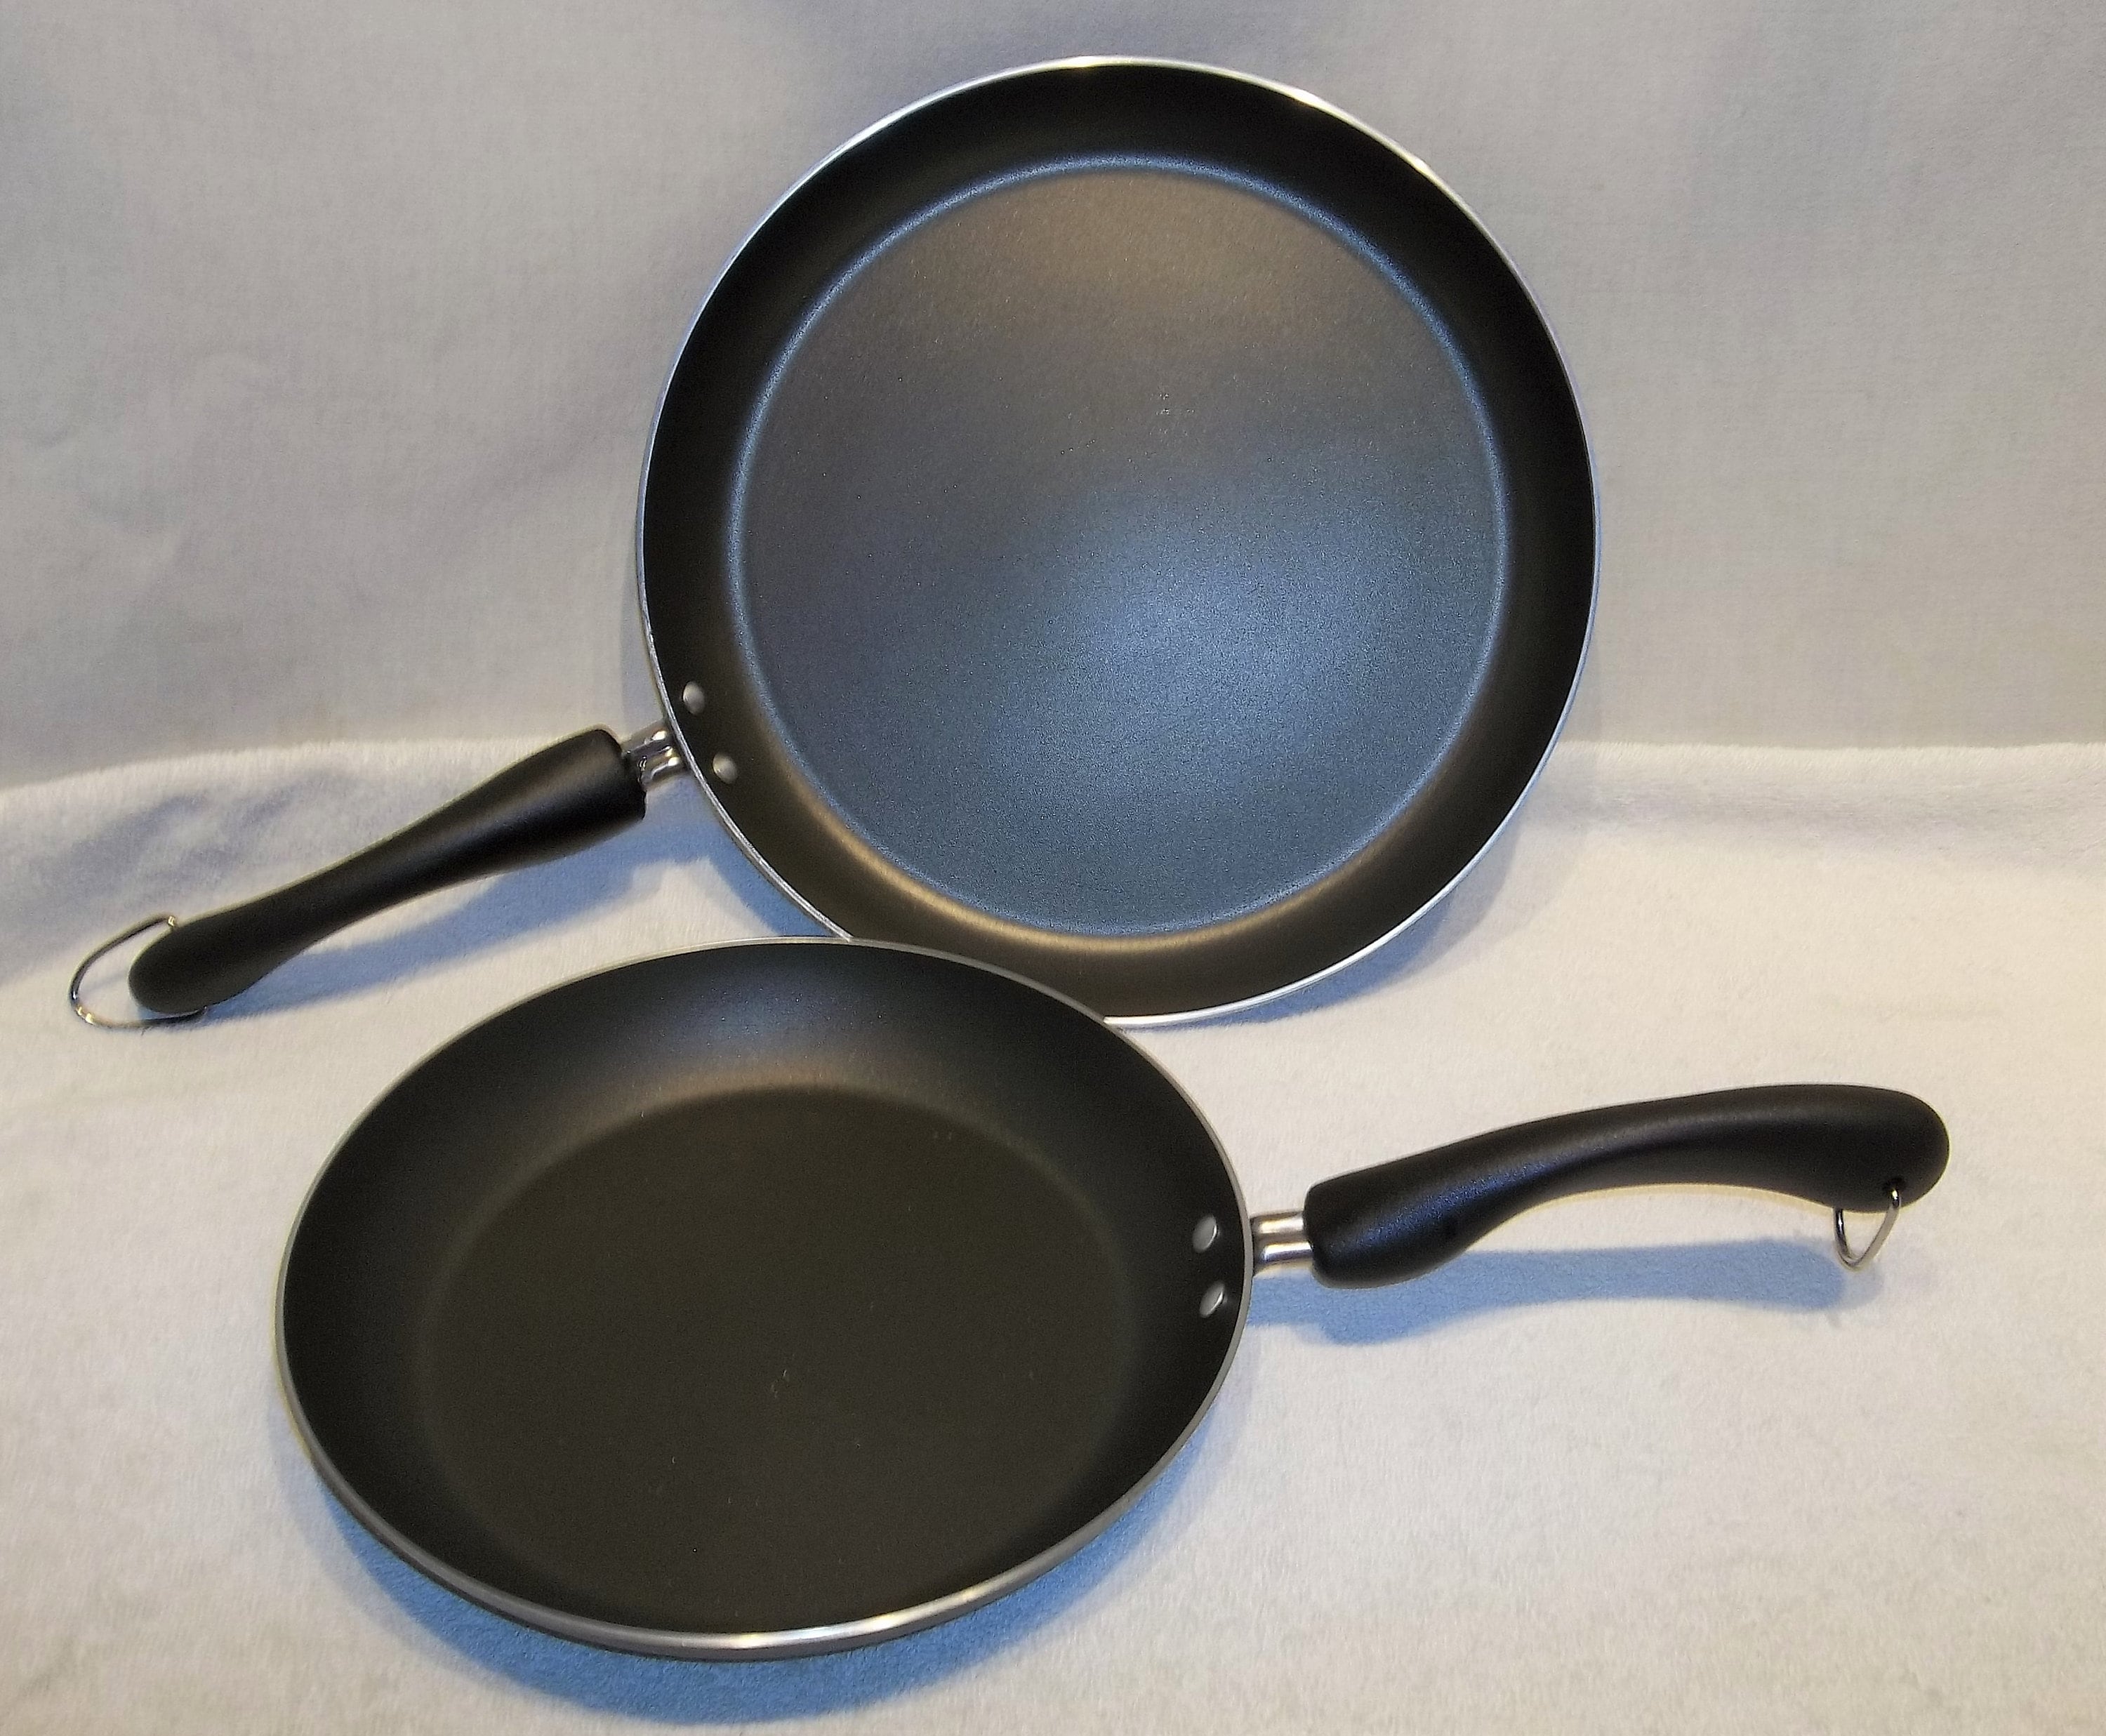 Farberware Style 10 Non-Stick Frying Pan